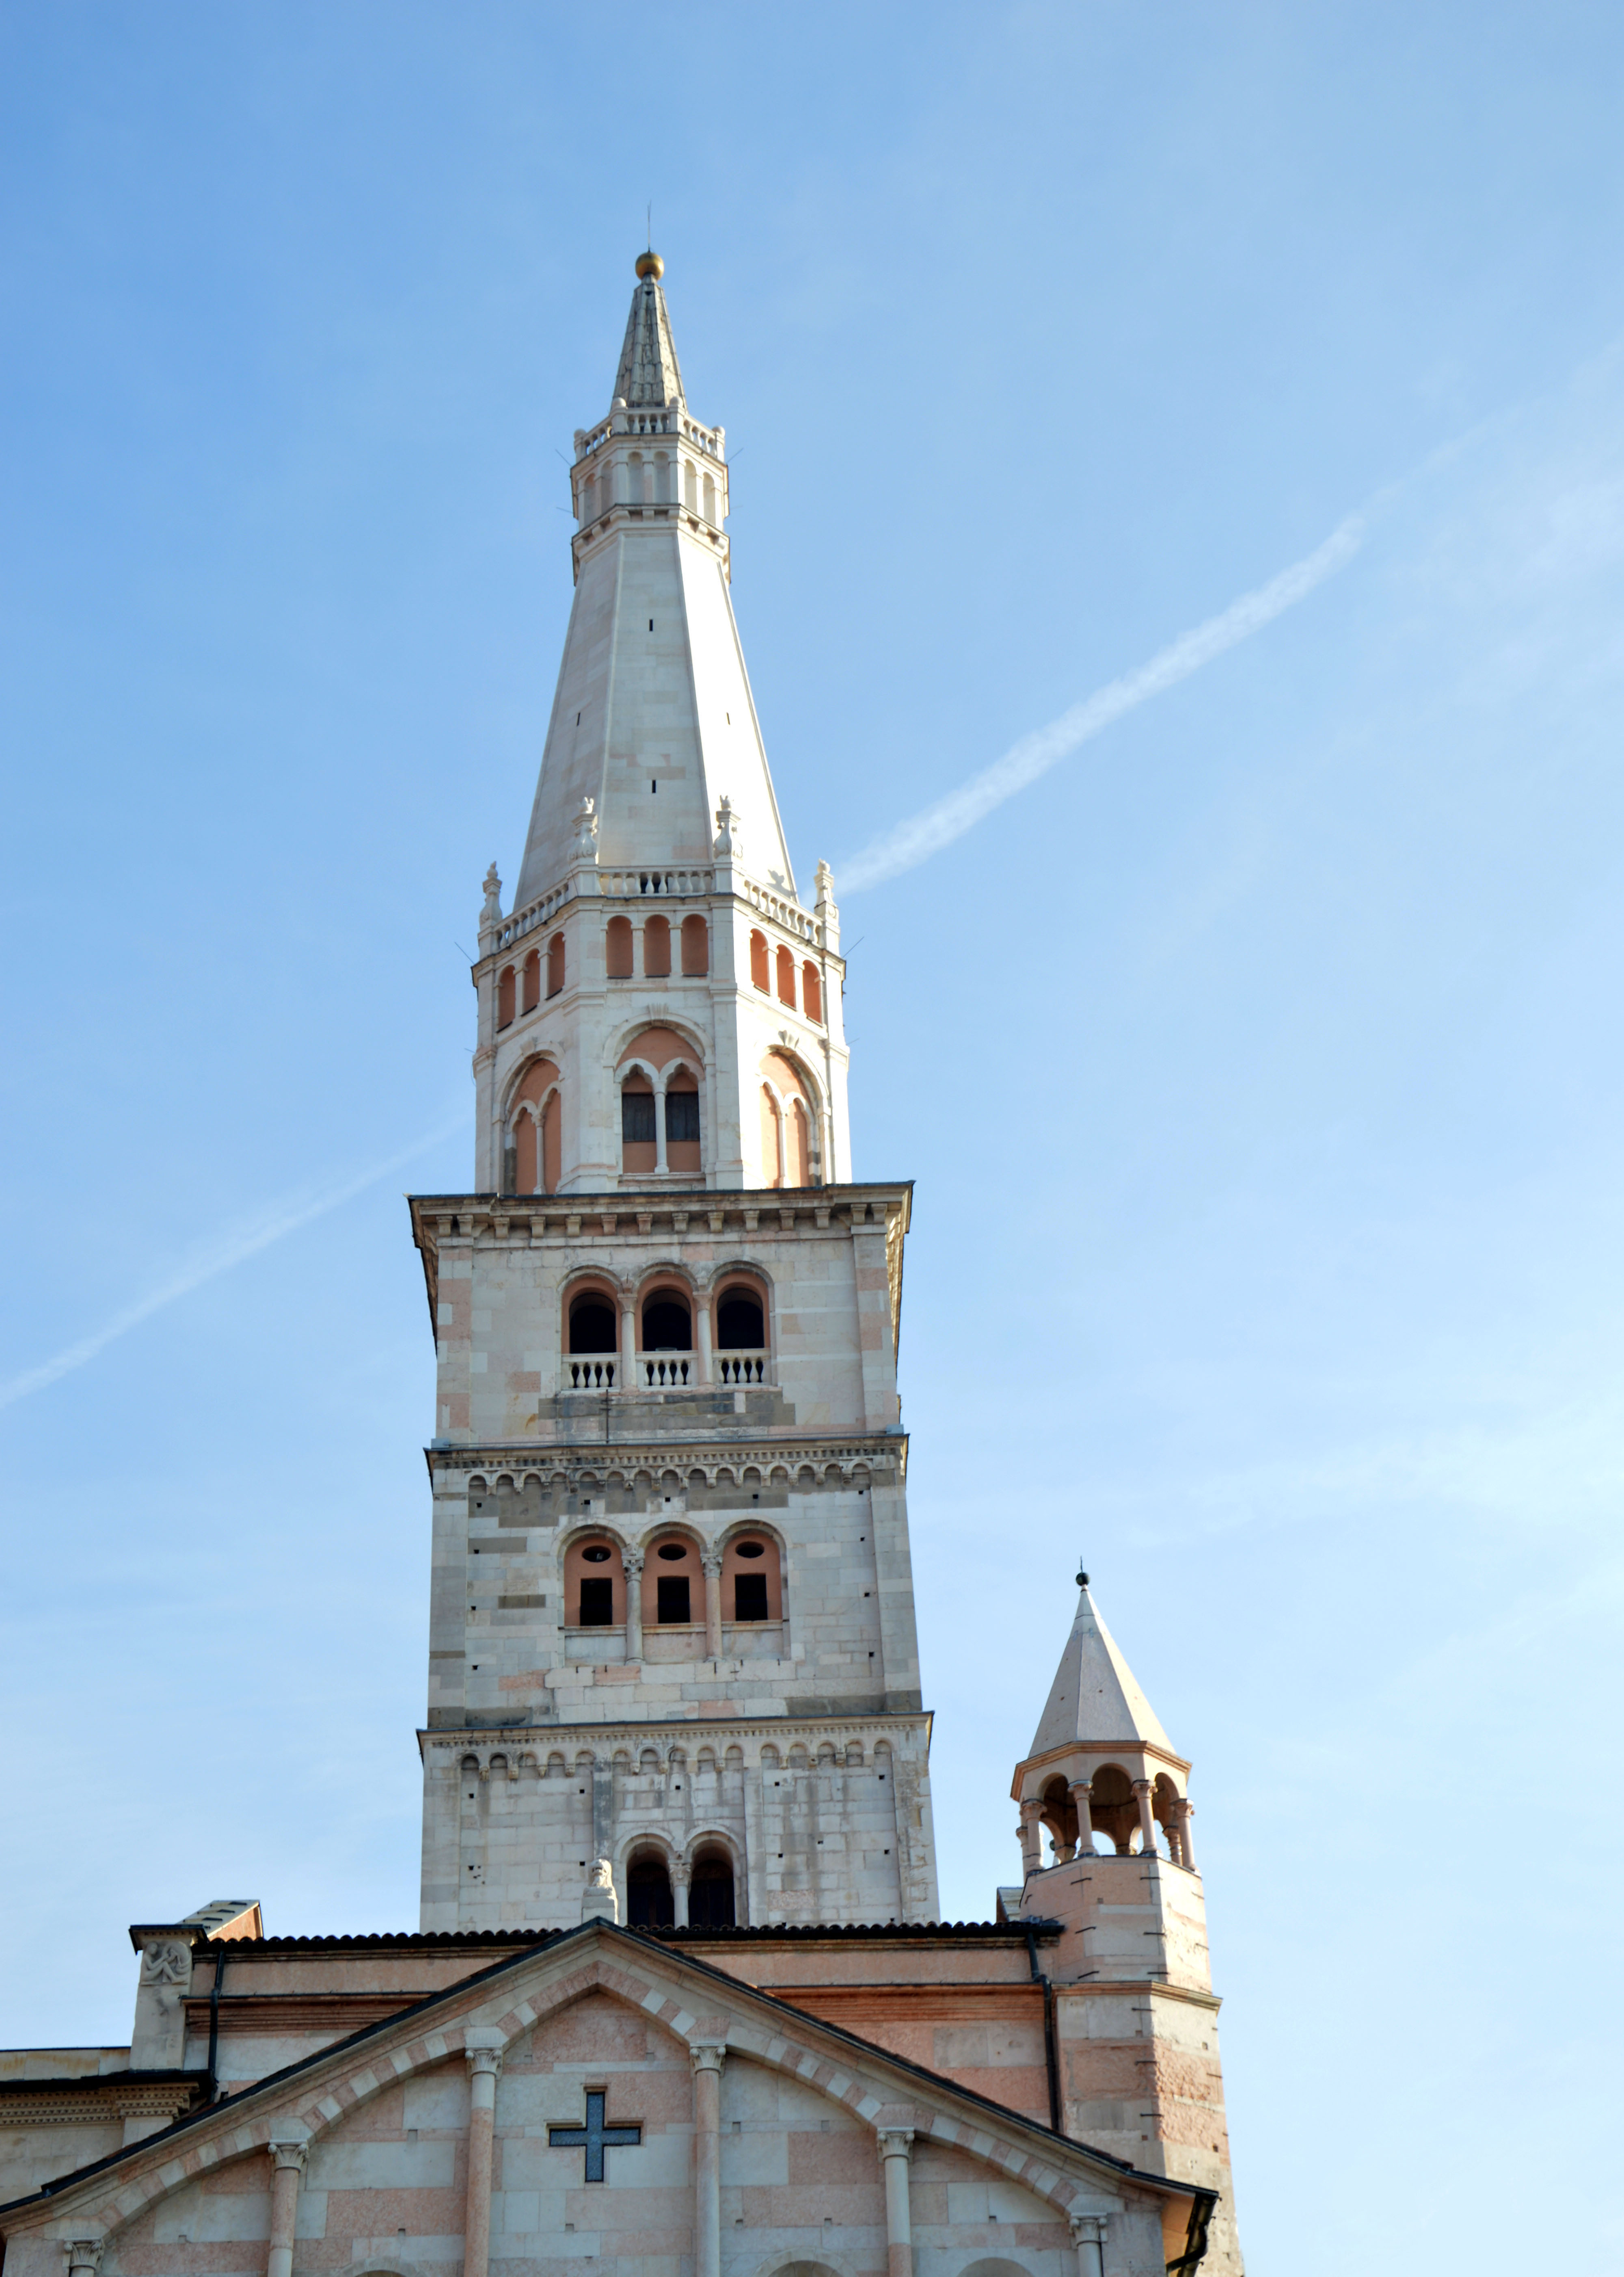 foto: https://upload.wikimedia.org/wikipedia/commons/2/2e/Ghirlandina%2C_torre_campanaria_del_Duomo_di_Modena.jpg